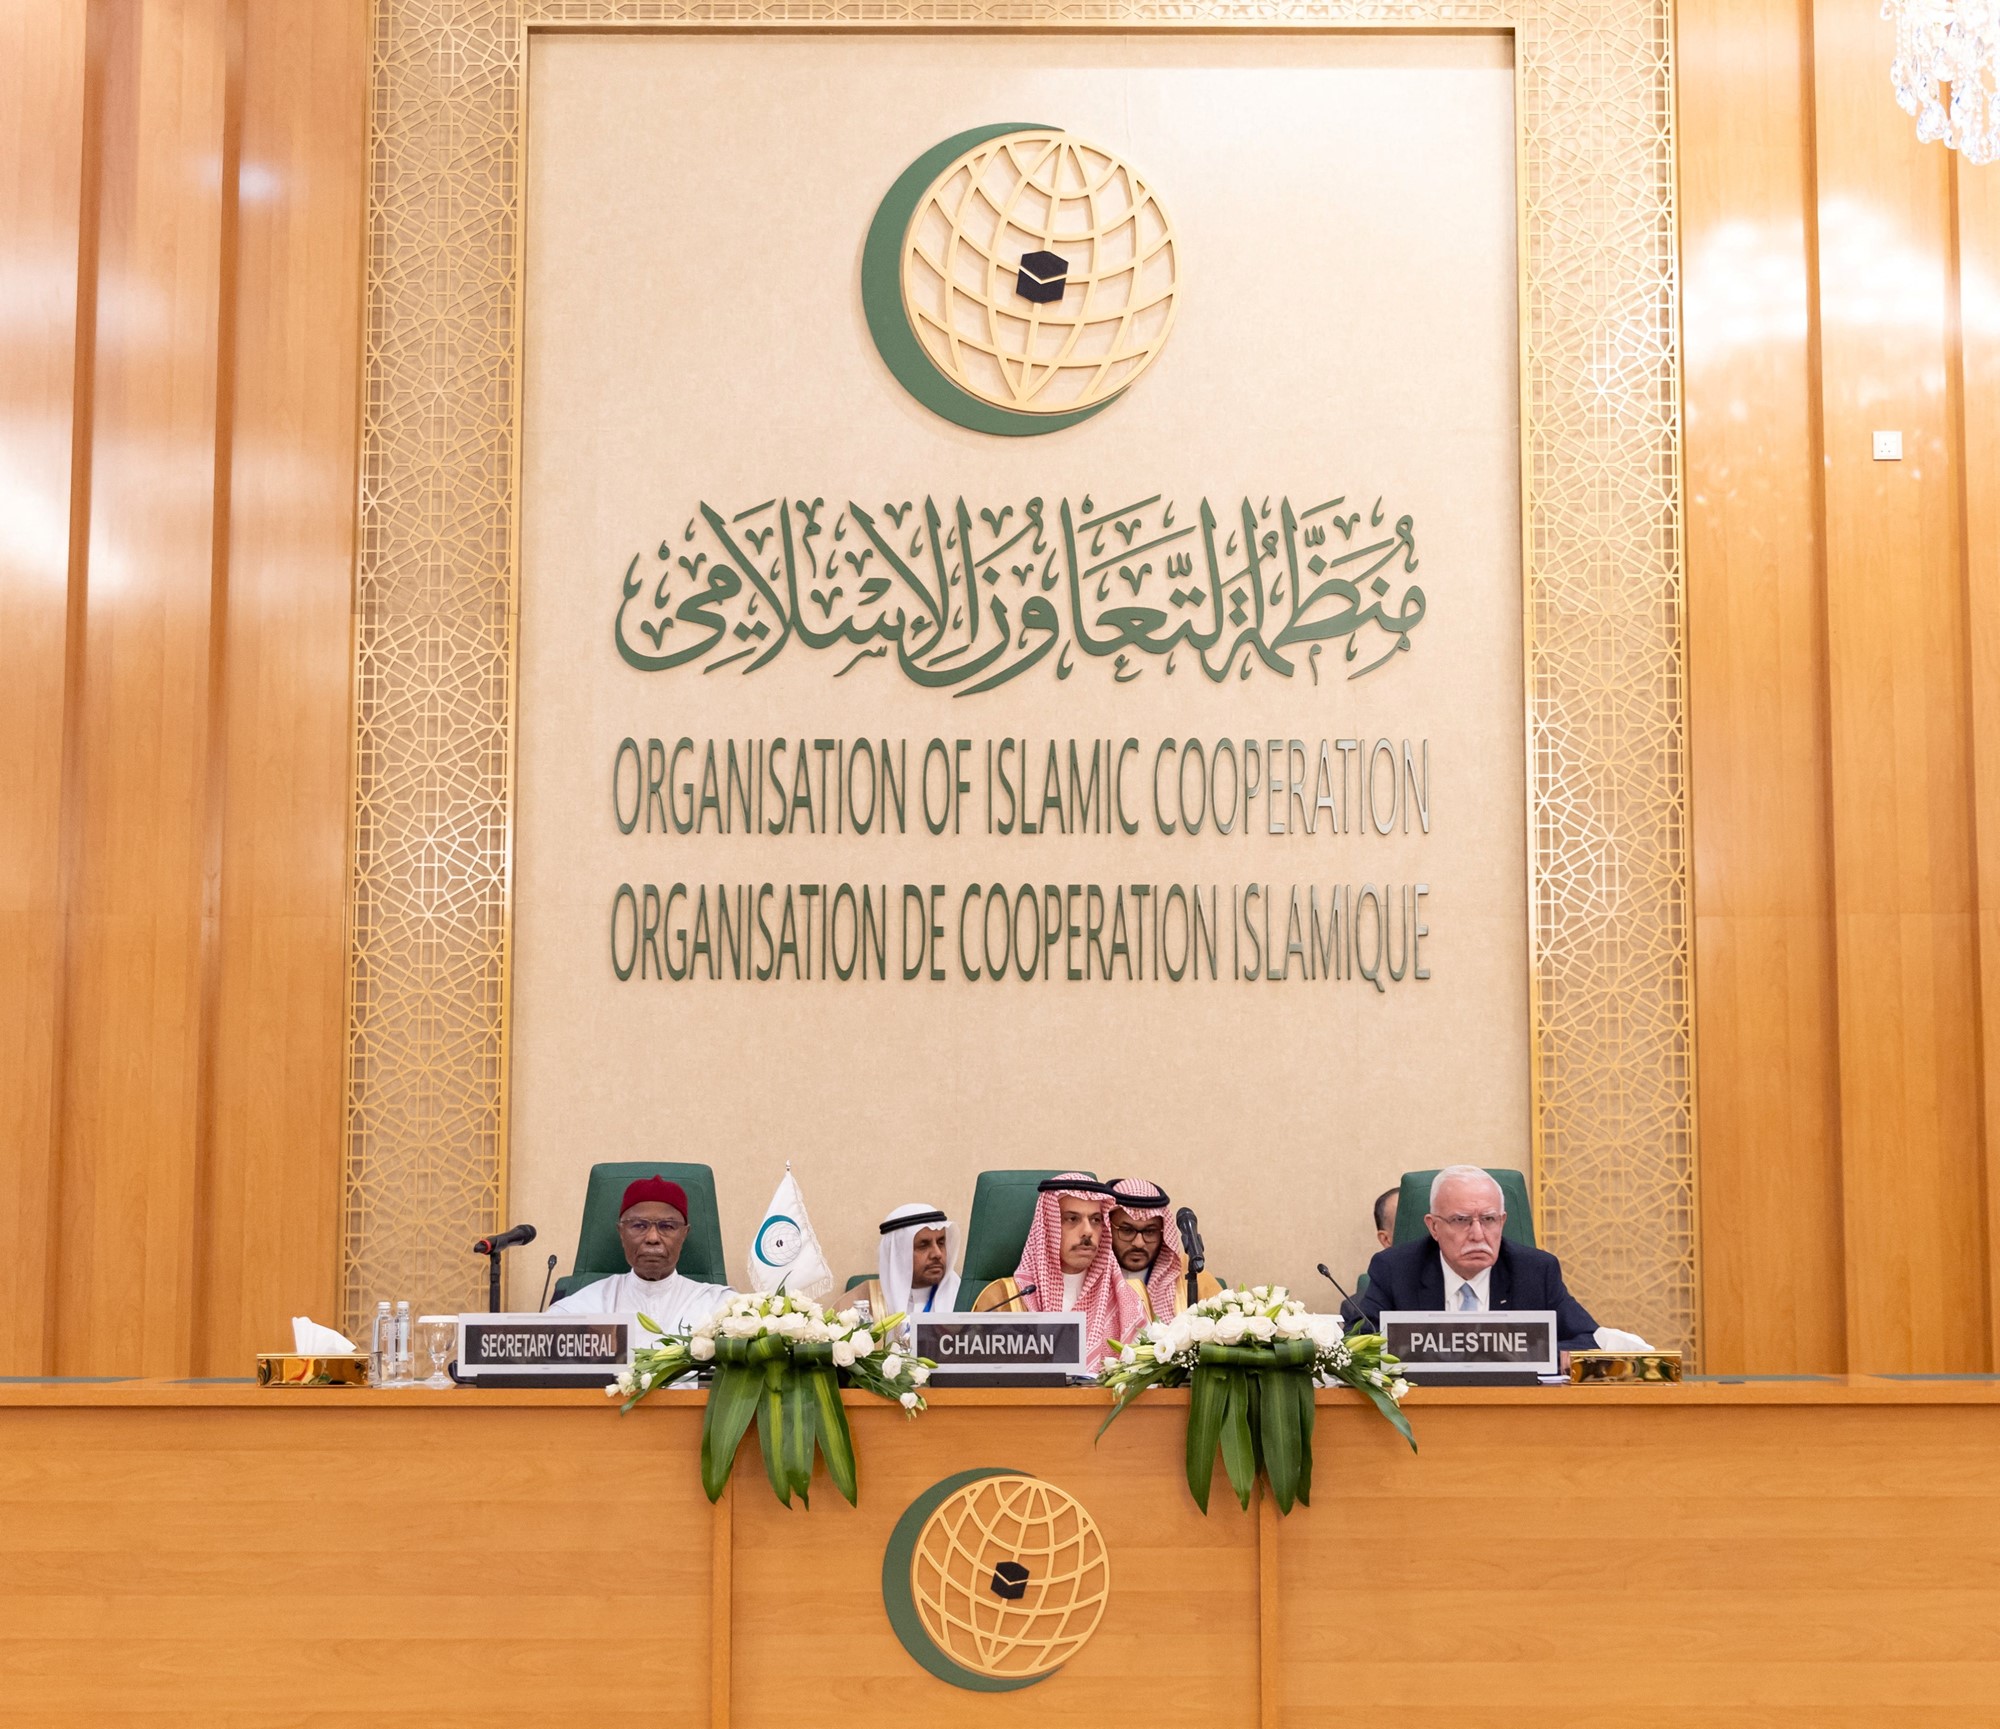 Saudi Arabia's Foreign Minister Prince Faisal bin Farhan Al Saud chairs the Organisation of Islamic Cooperation meeting in Jeddah, Saudi Arabia.